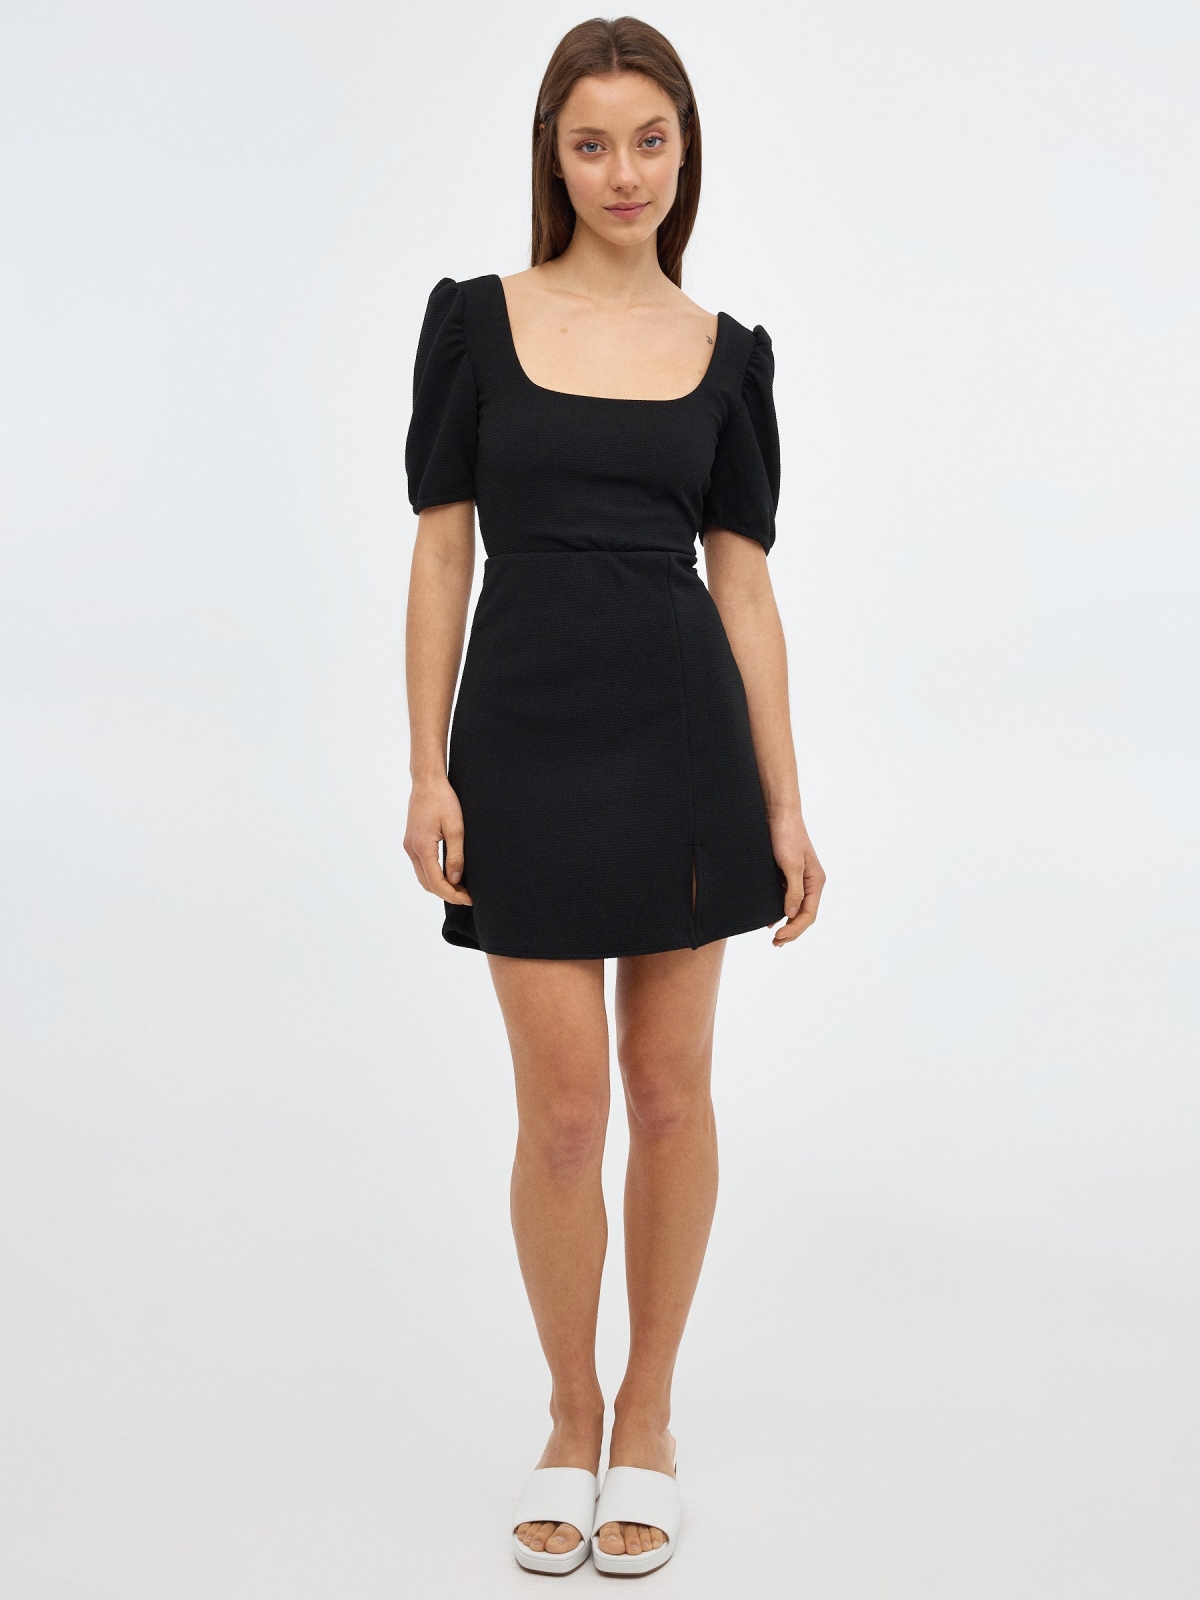 Mini-vestido texturizado preto vista geral frontal